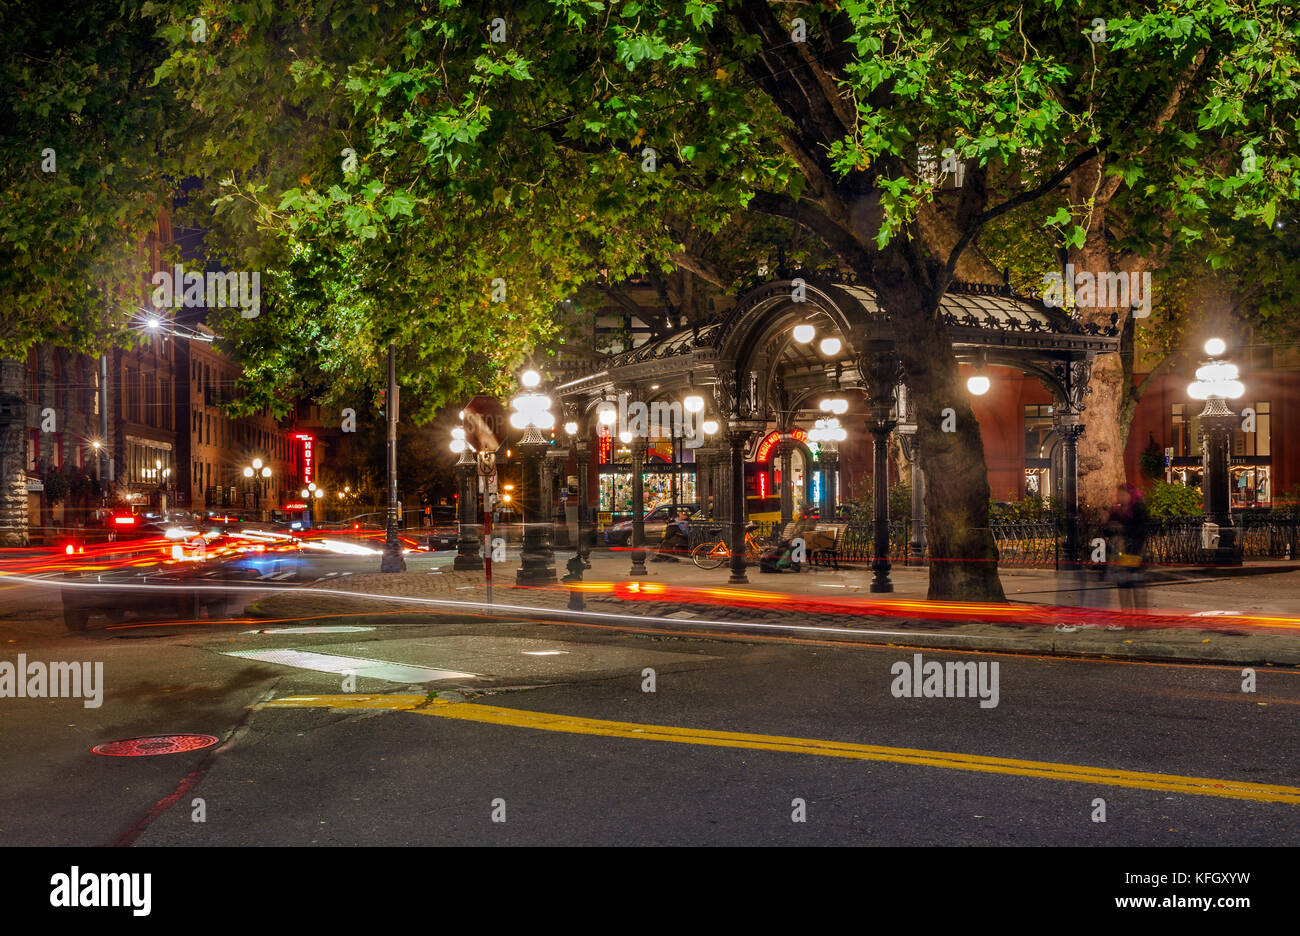 WA14169-00...WASHINGTON - Seattles Pioneer Square Pergola di notte vista dall'angolo di James Street e Yesler Street. Foto Stock